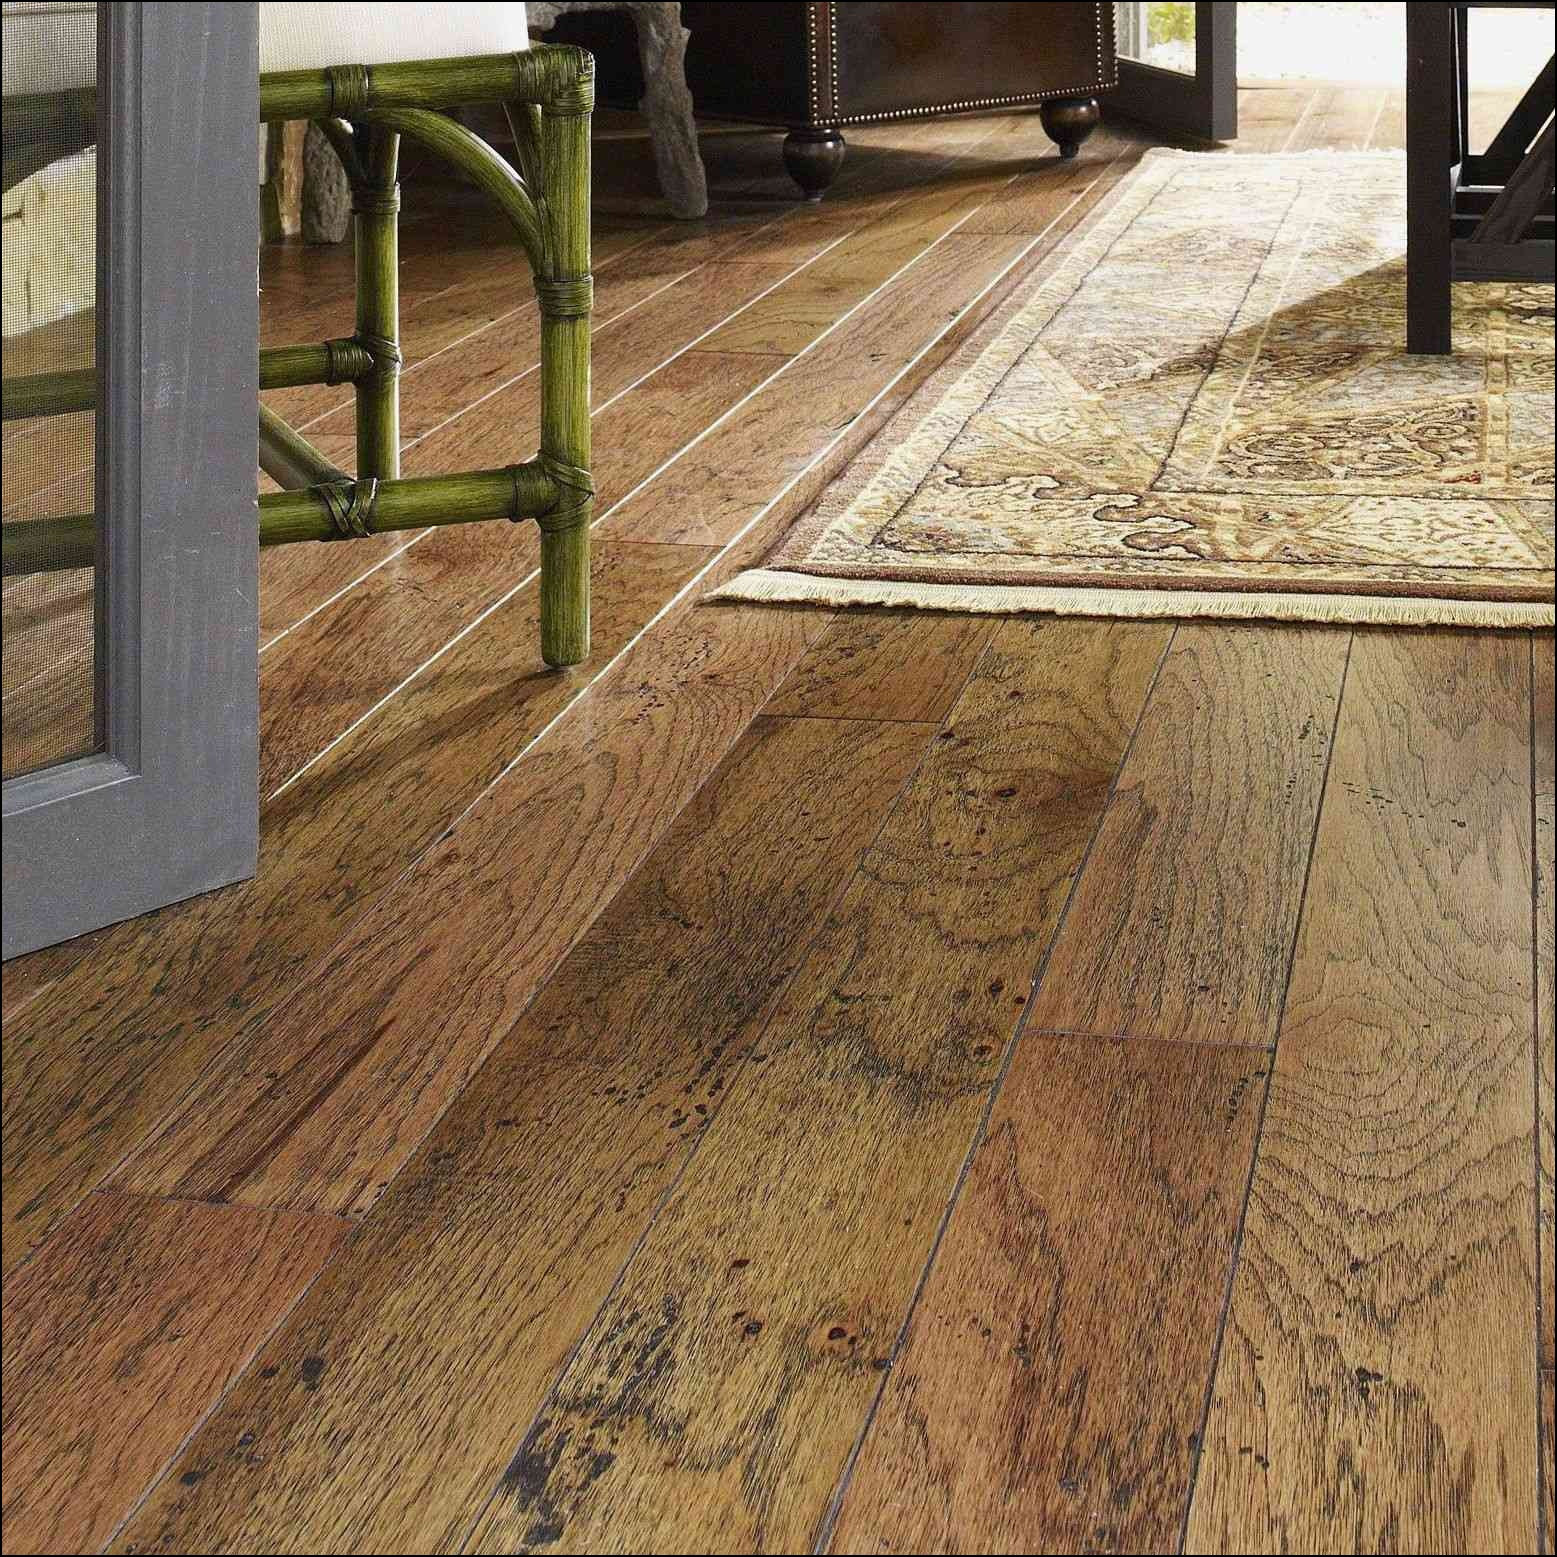 wide plank oak hardwood flooring of wide plank flooring ideas inside wide plank dark wood flooring images best type wood flooring best floor floor wood floor wood